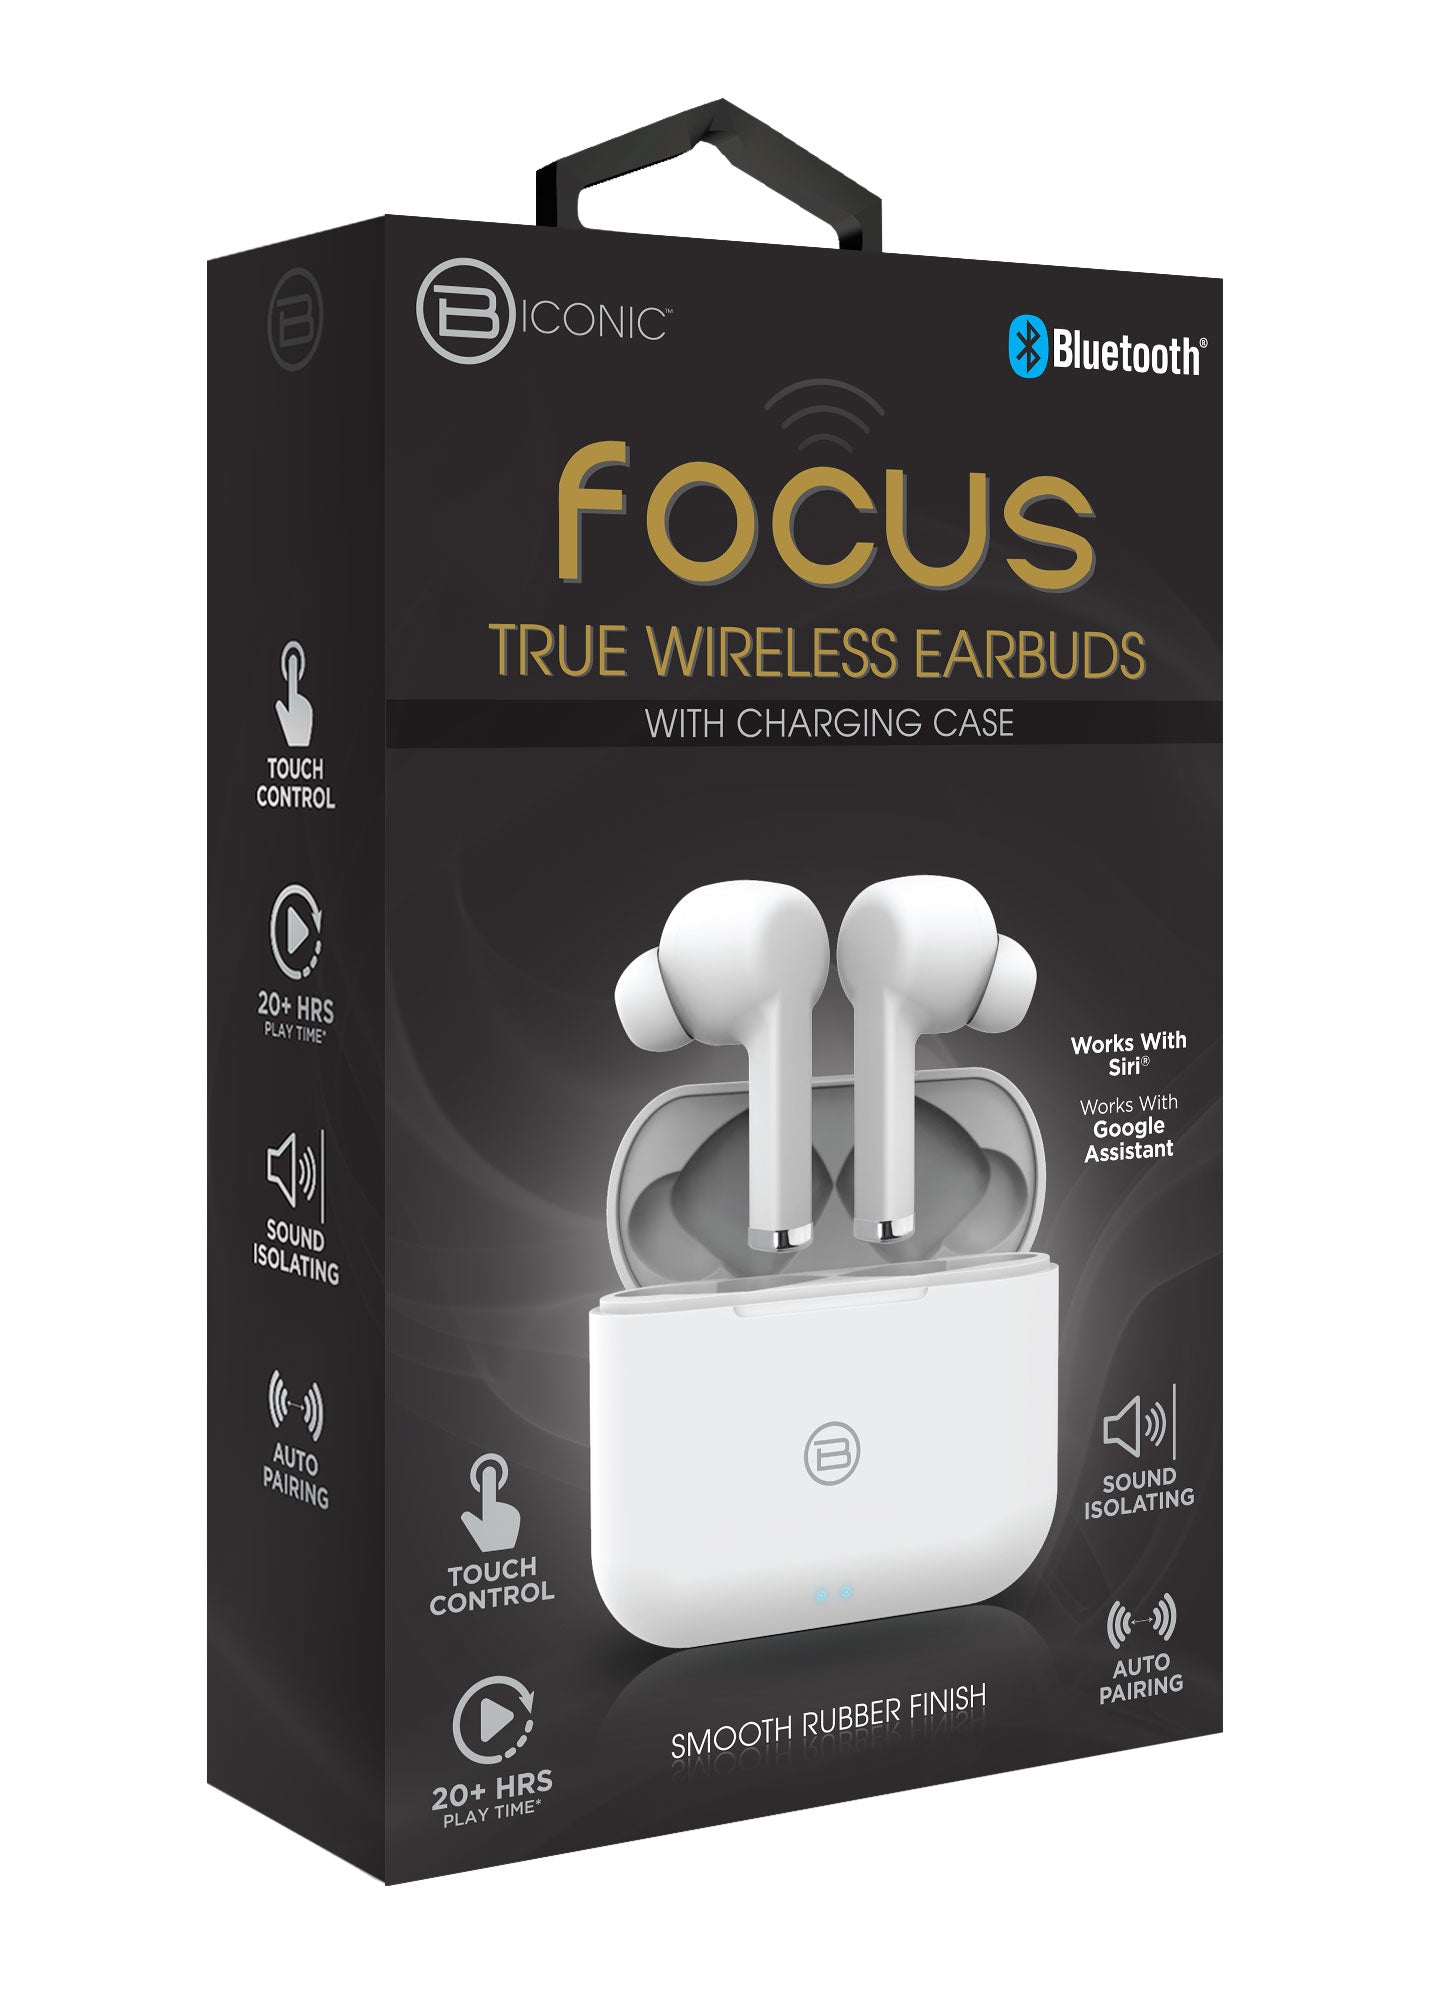 Audifonos True Wireless Focus - BICONIC